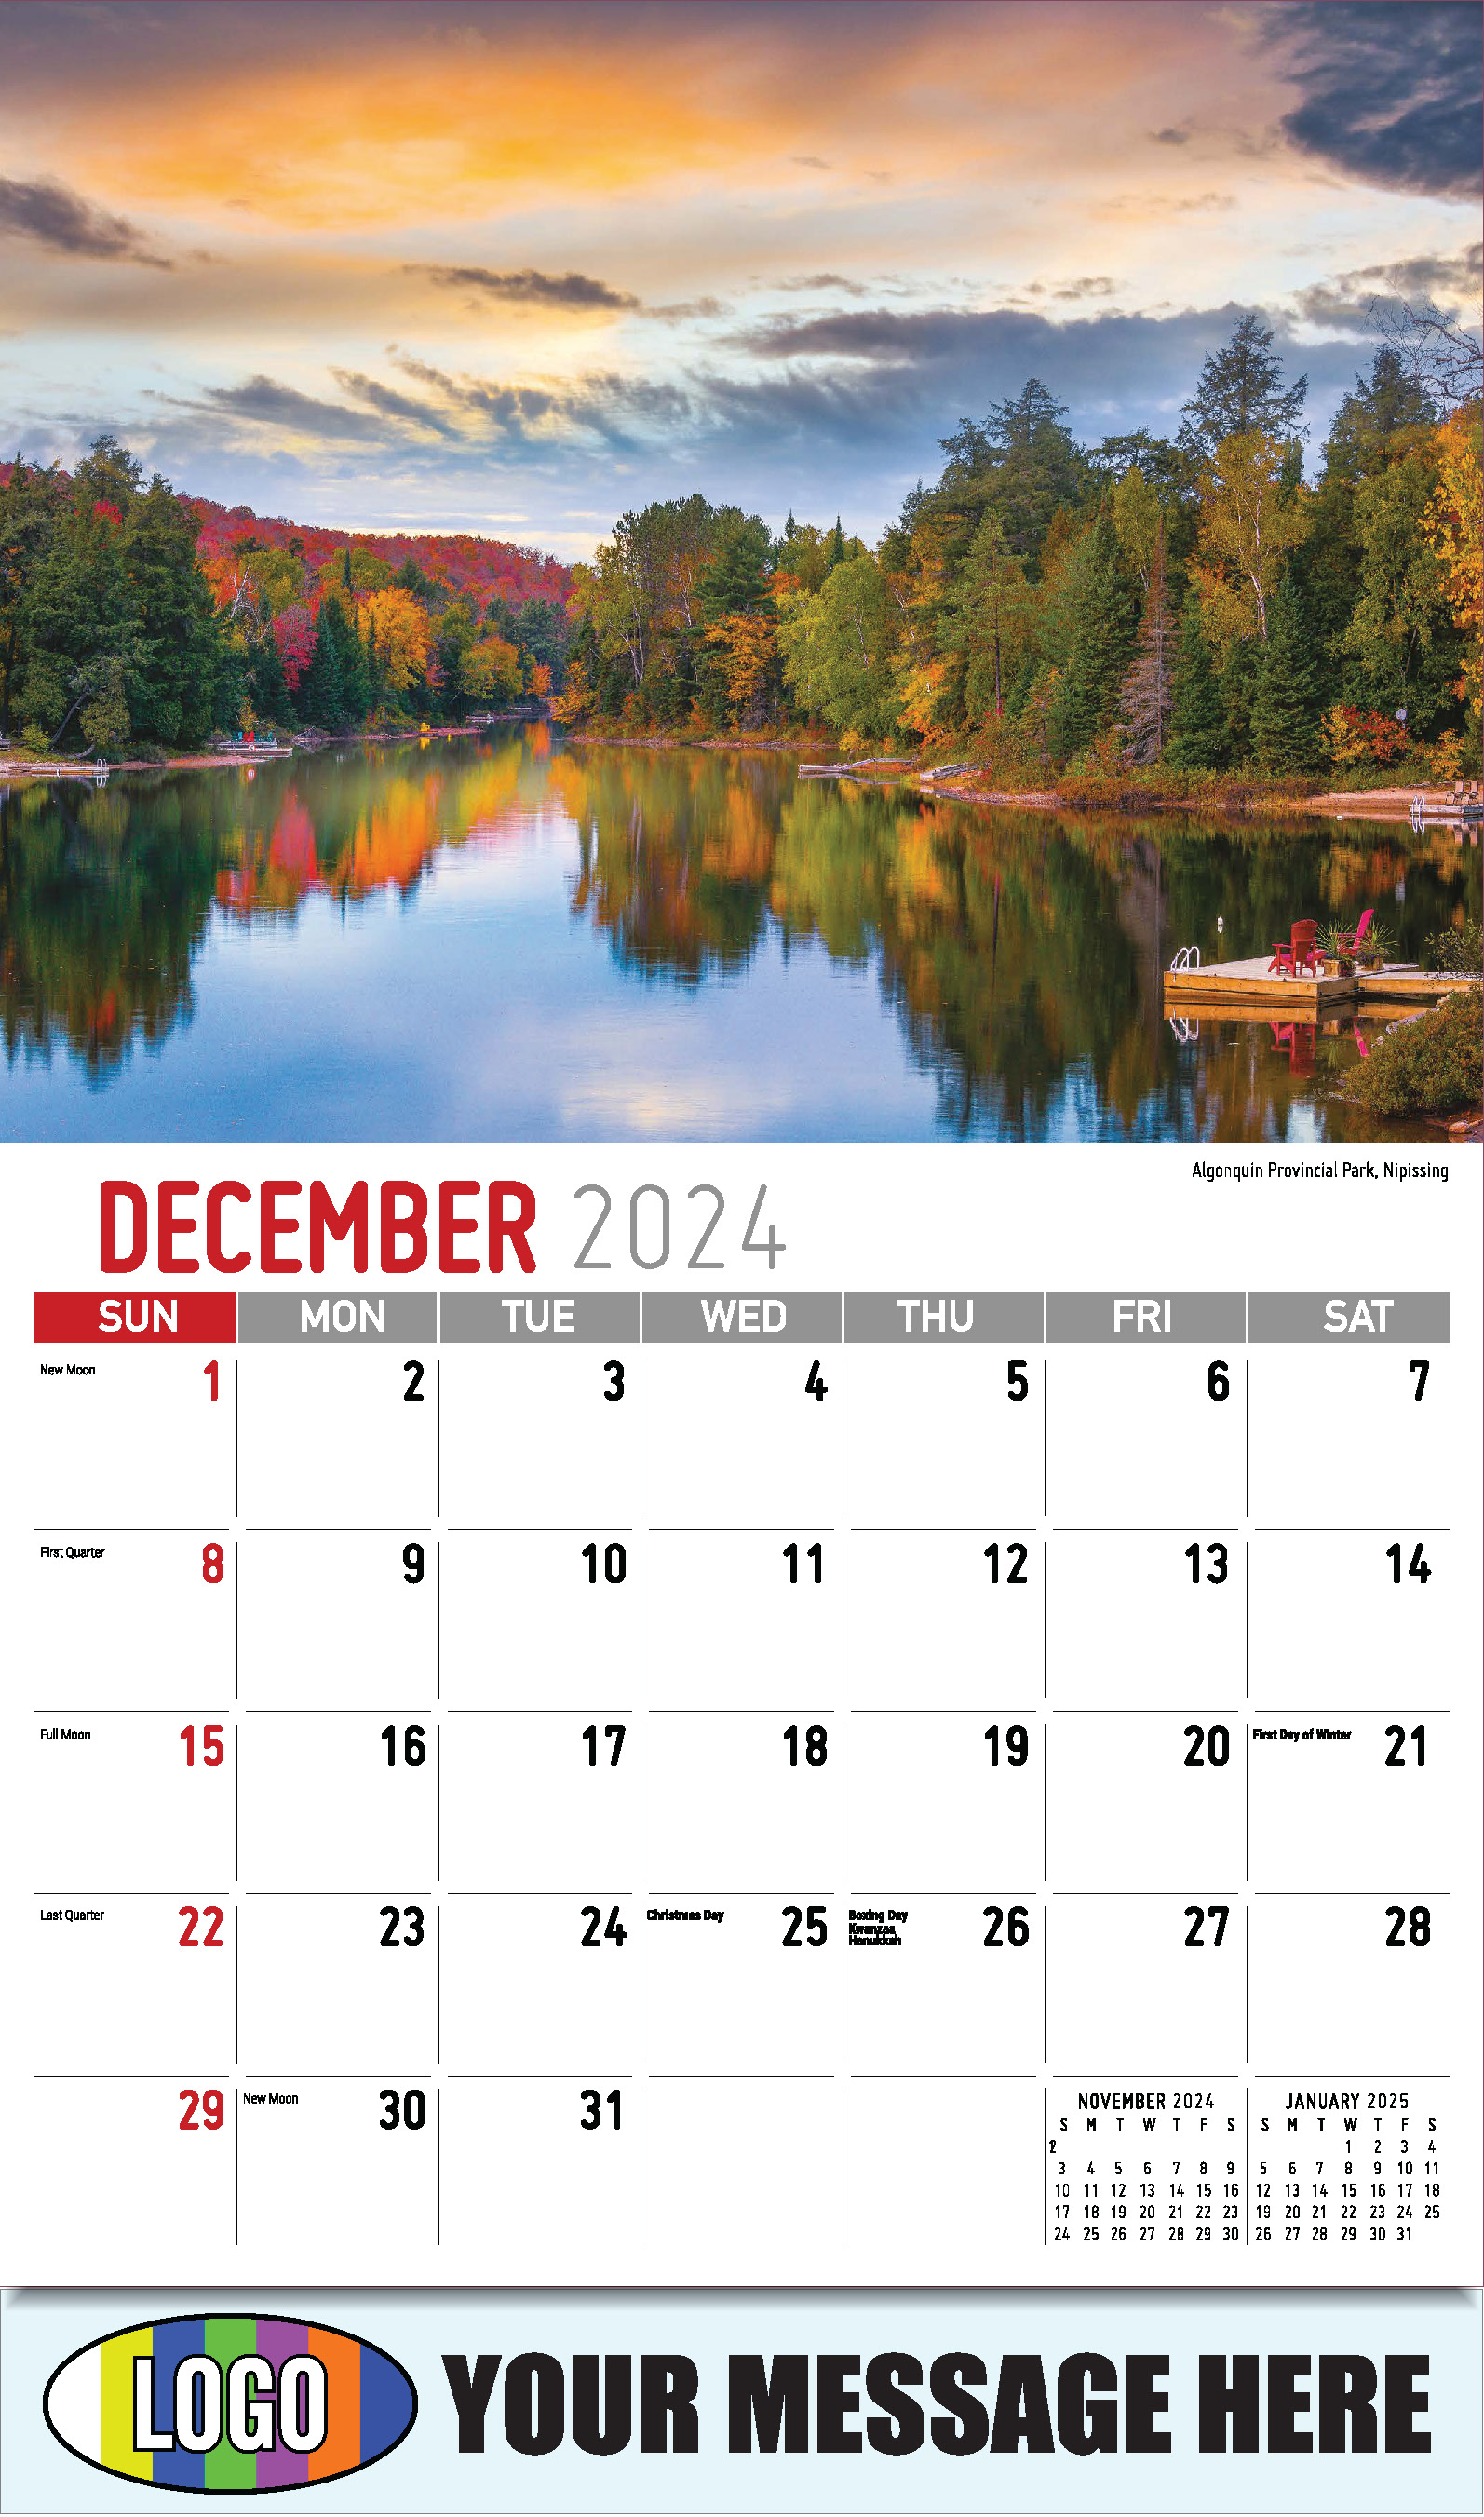 Scenes of Ontario 2025 Business Promo Wall Calendar - December_a